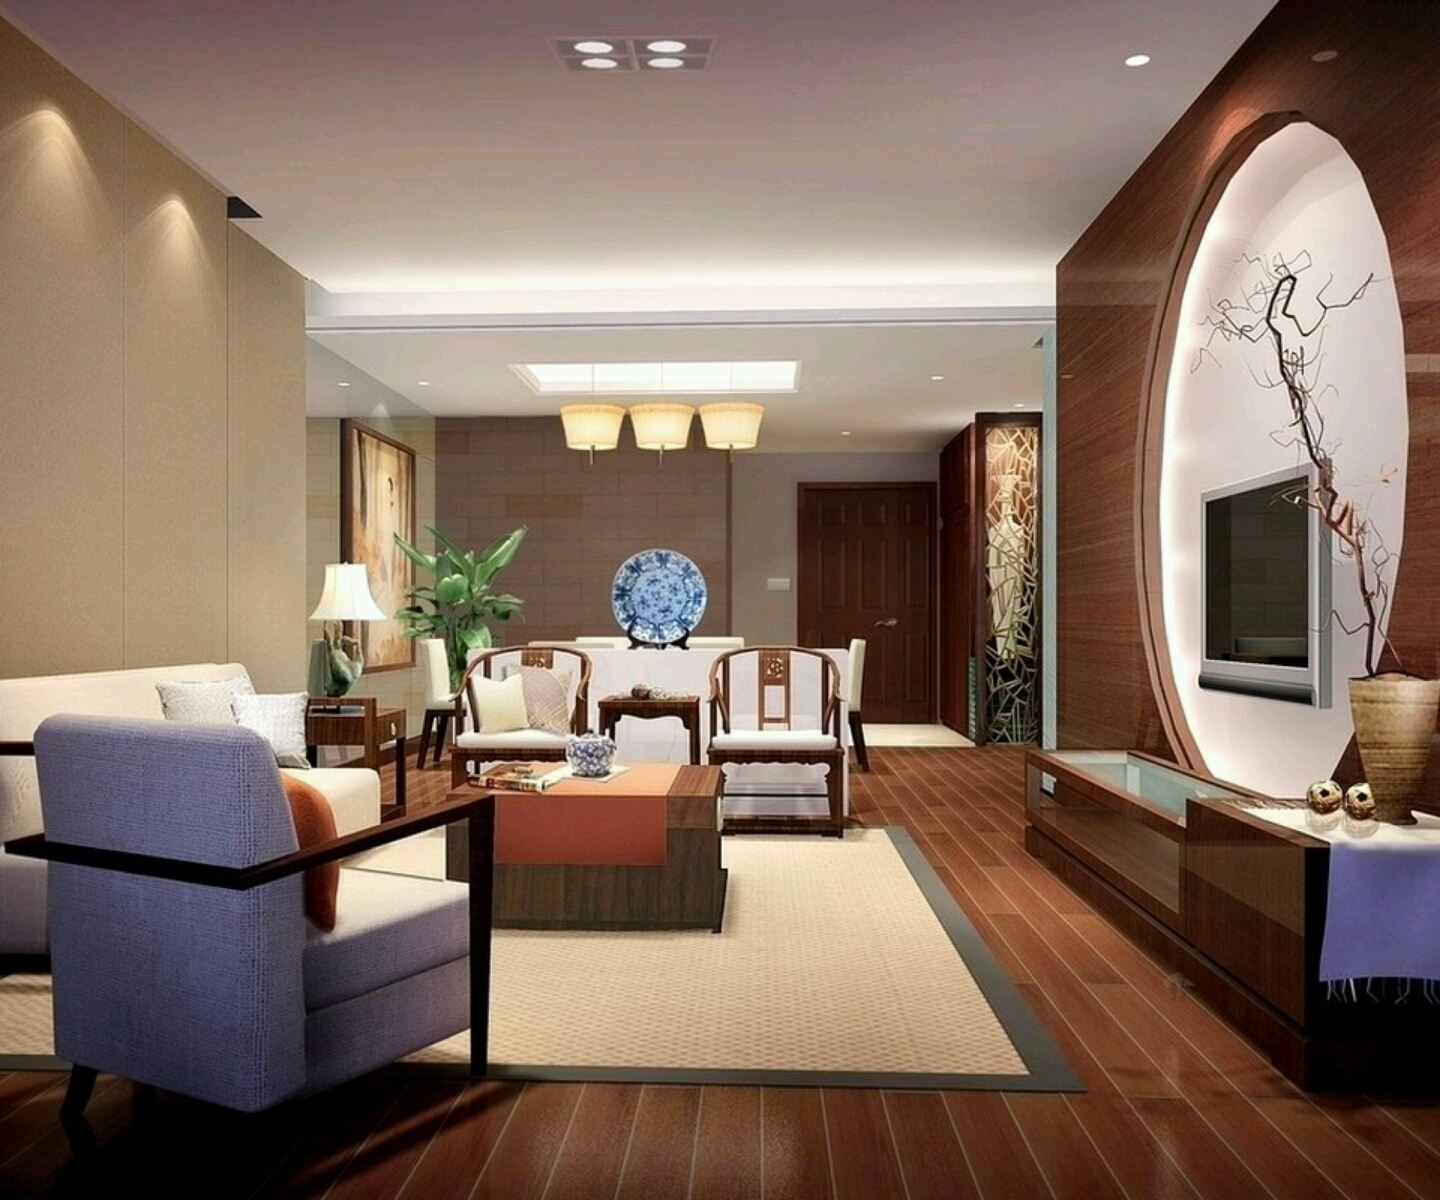 Luxury homes interior decoration living room designs ideas. | Modern